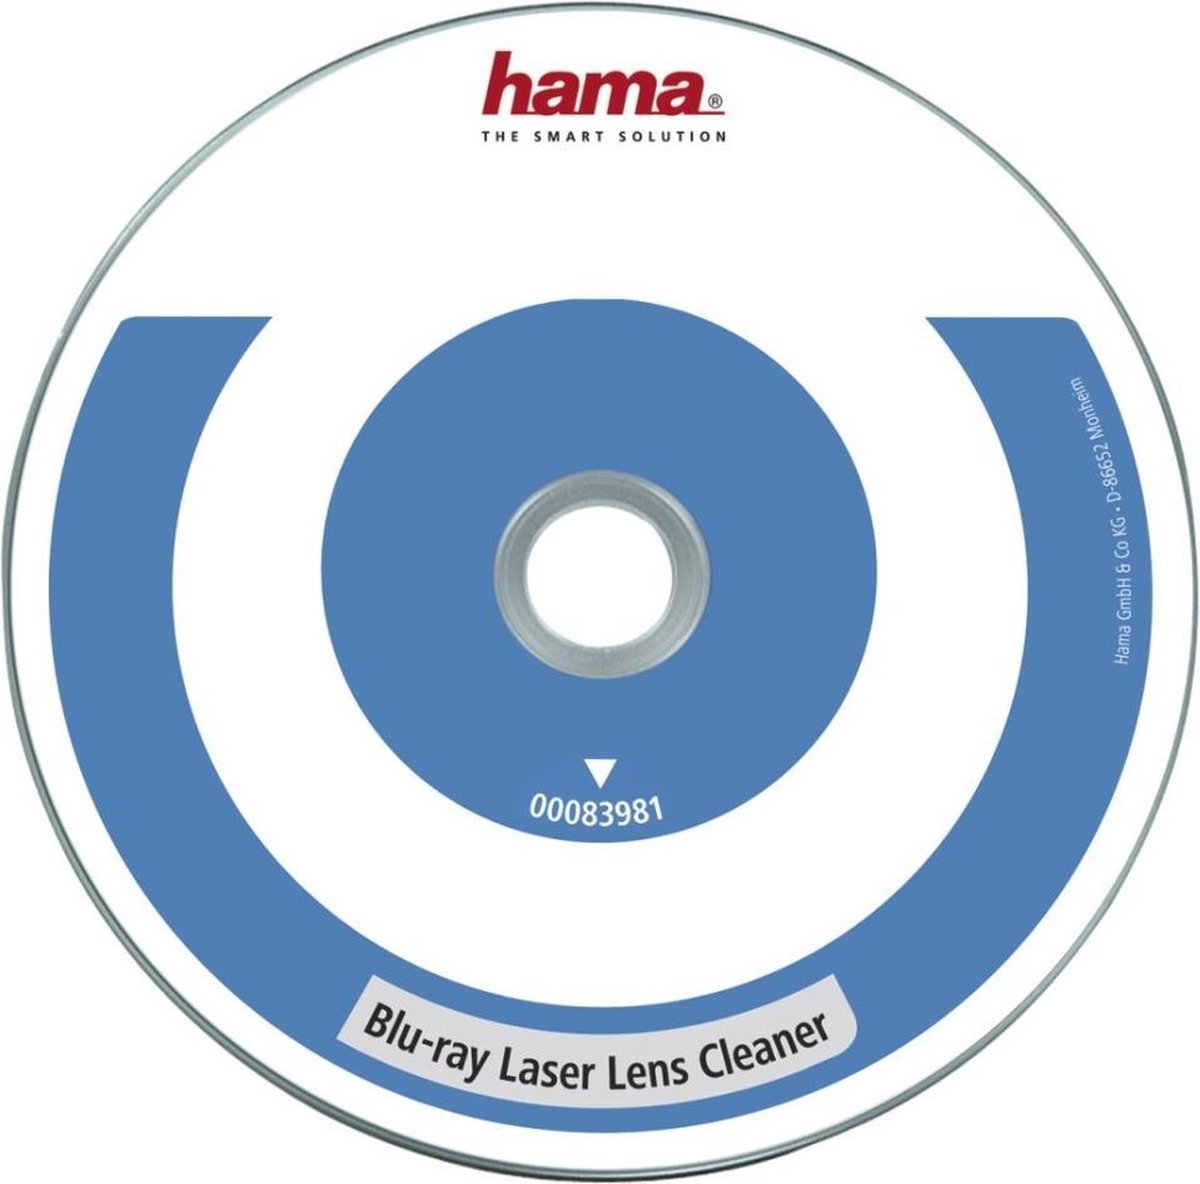 Hama Blue-Ray Laser Lens Cleaner. - Hama